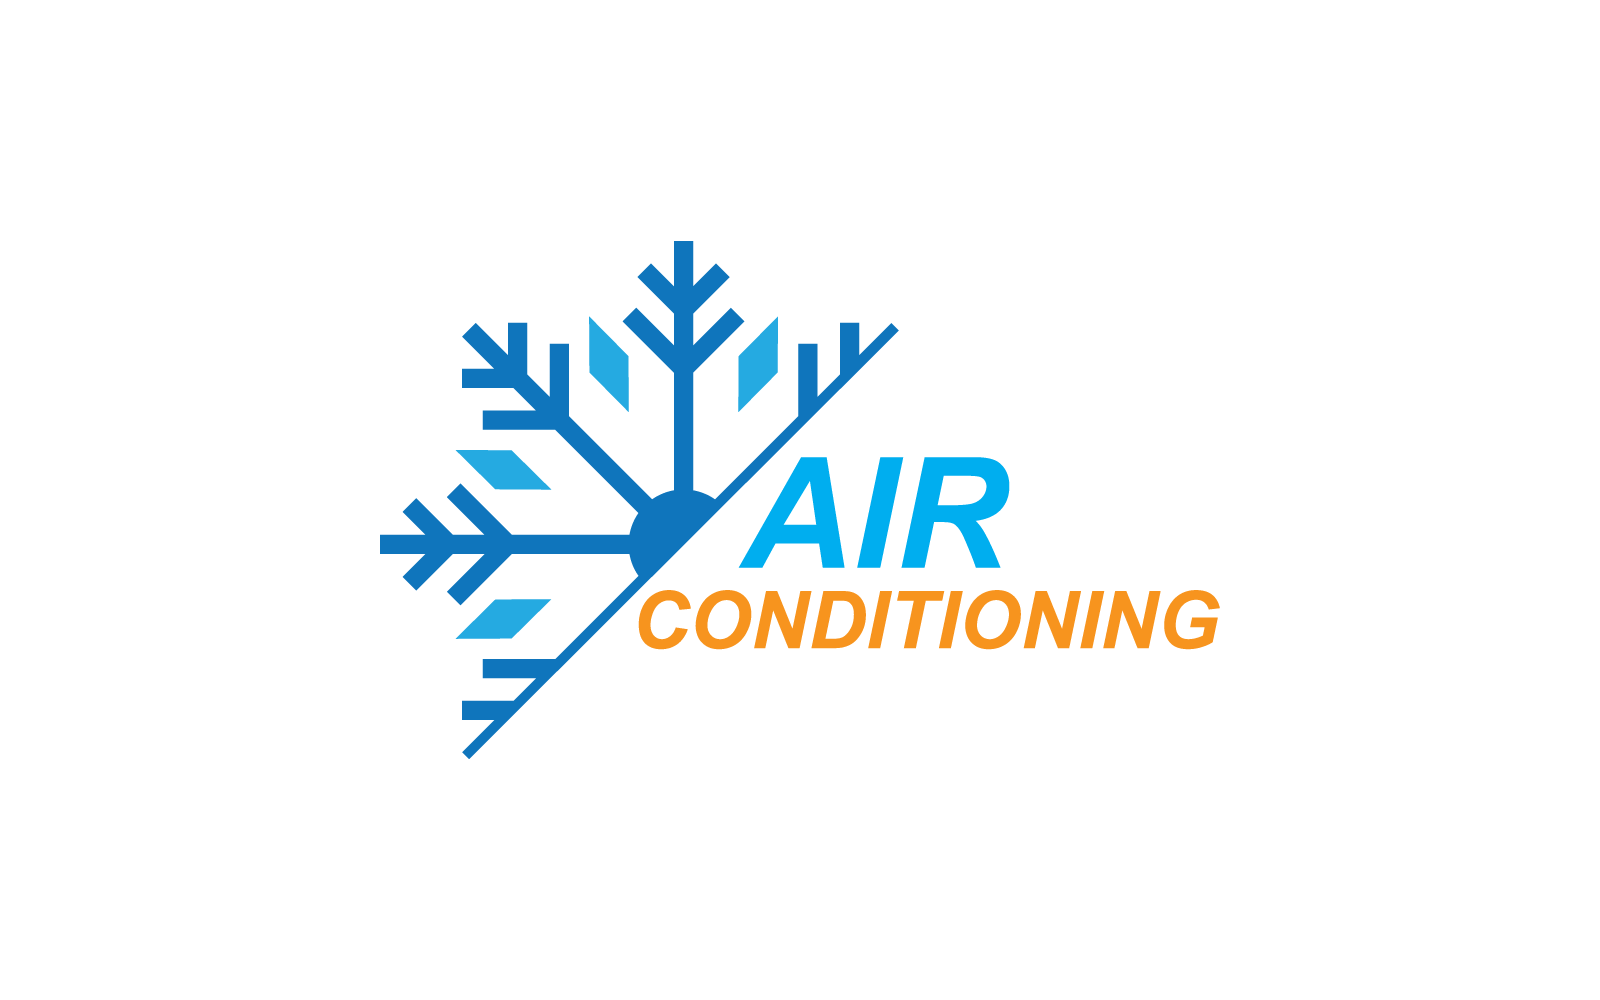 Air conditioner illustration vector logo flat design